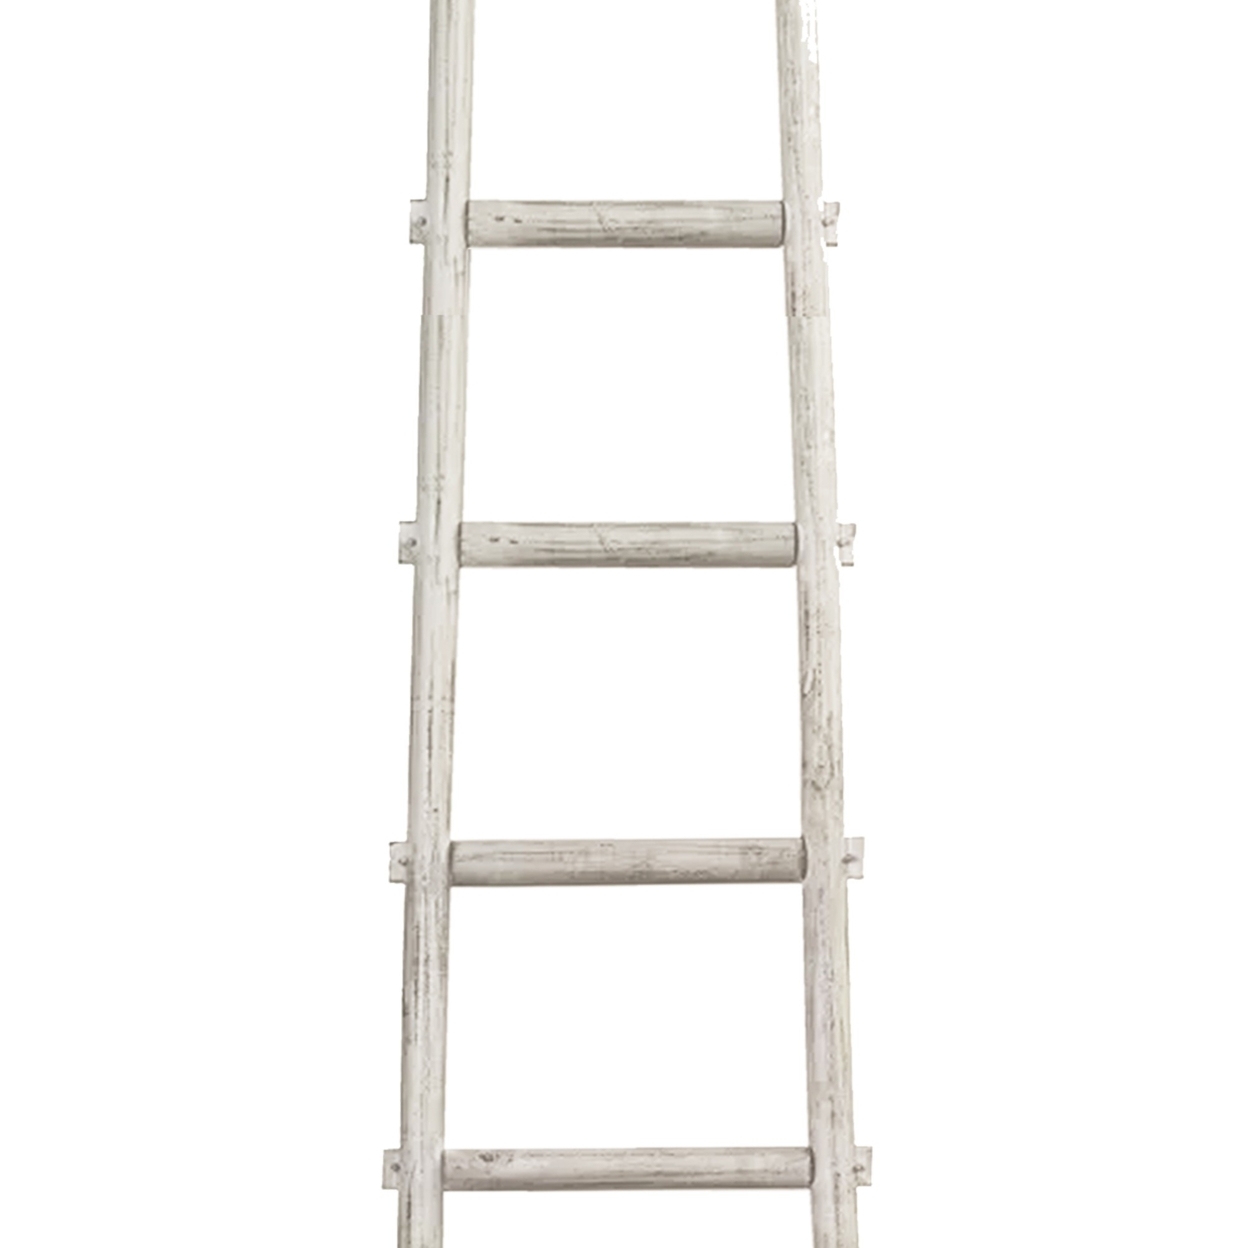 Transitional Style Wooden Decor Ladder With 6 Steps, White- Saltoro Sherpi